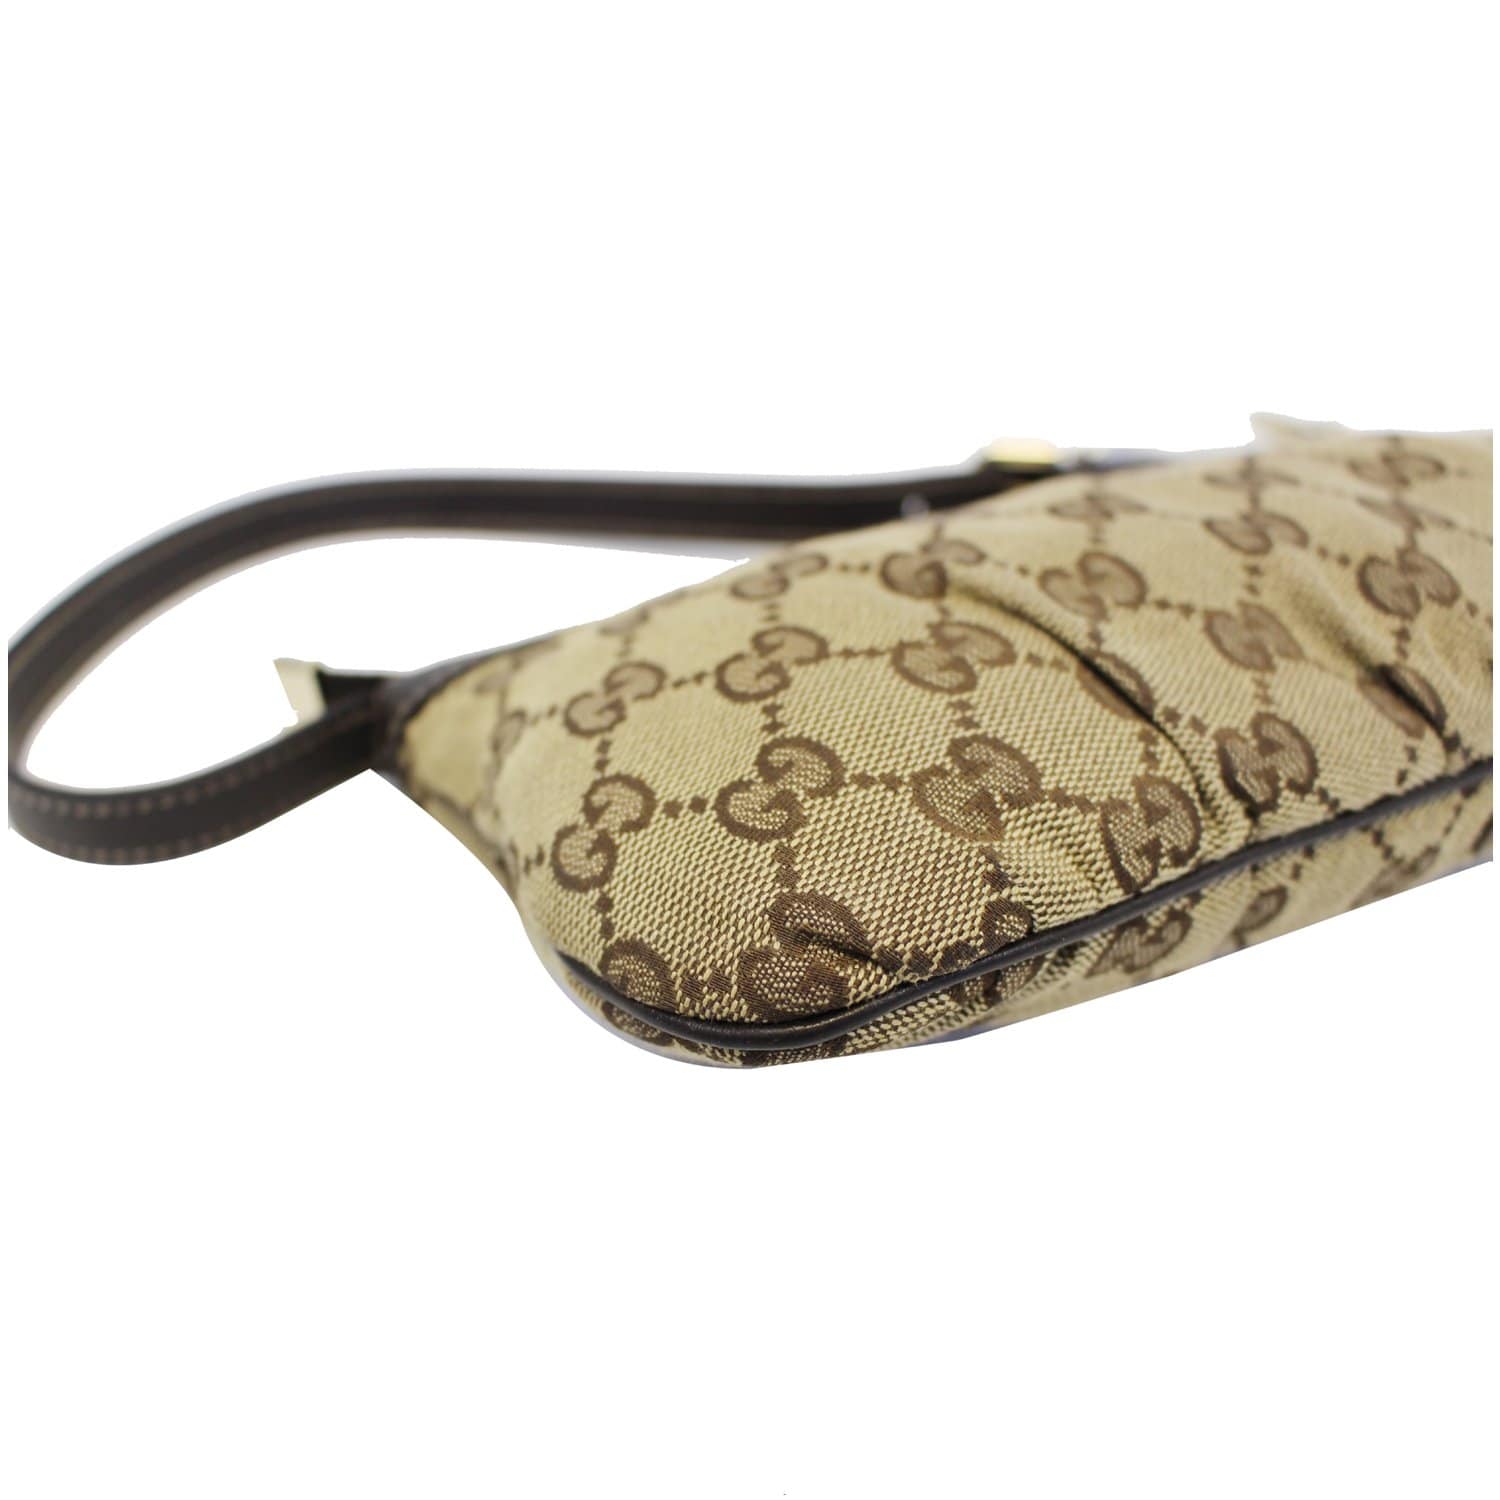 Gucci GG Canvas and Leather Web Pochette Clutch Bag Beige/Dark Brown